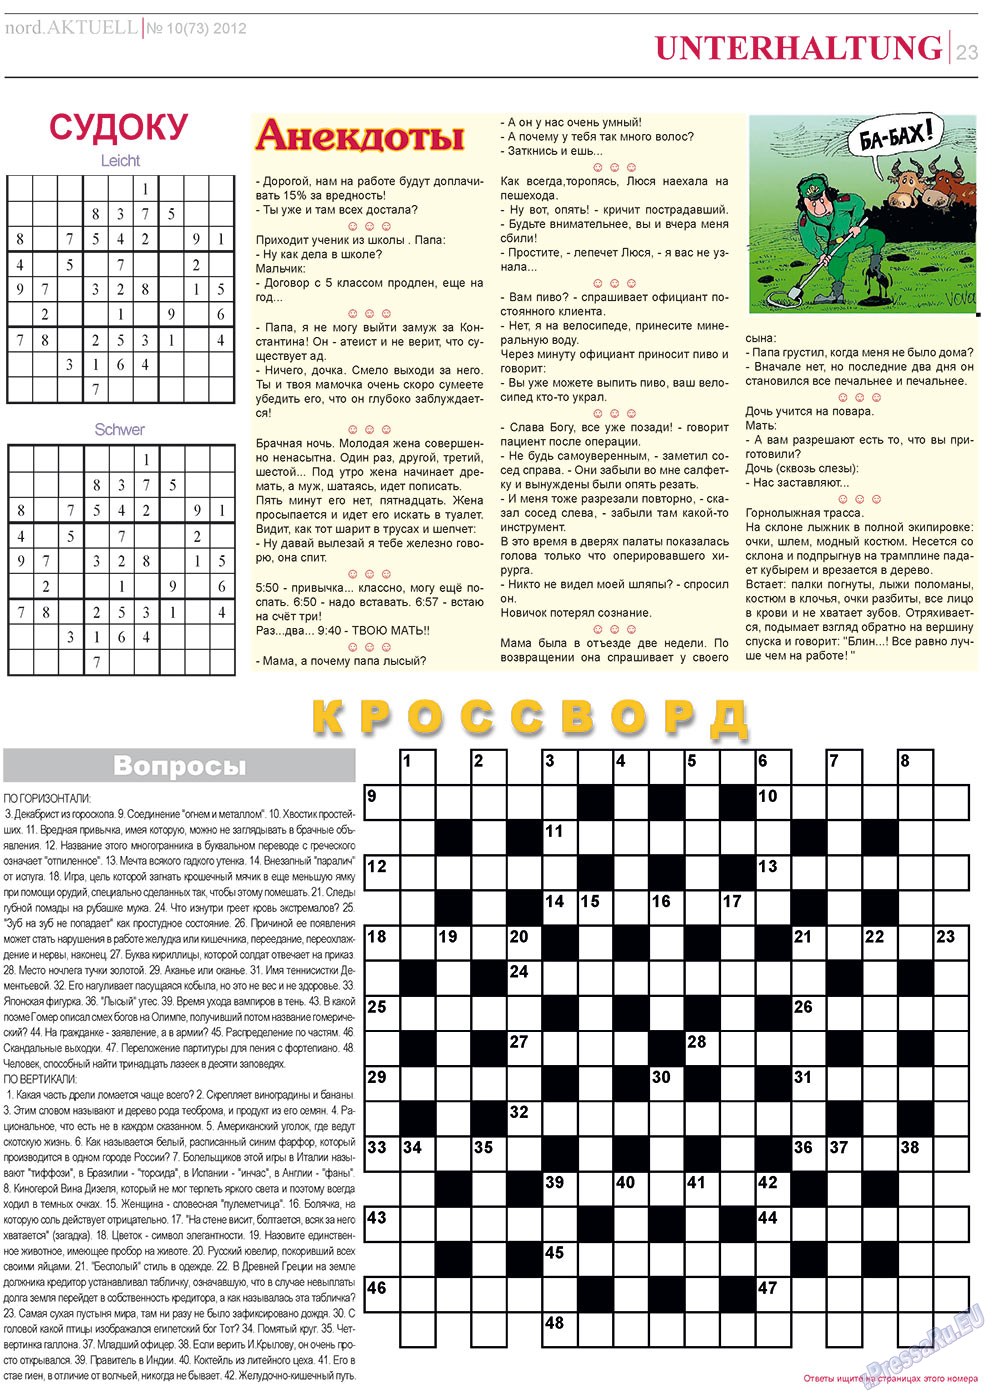 nord.Aktuell, газета. 2012 №10 стр.23